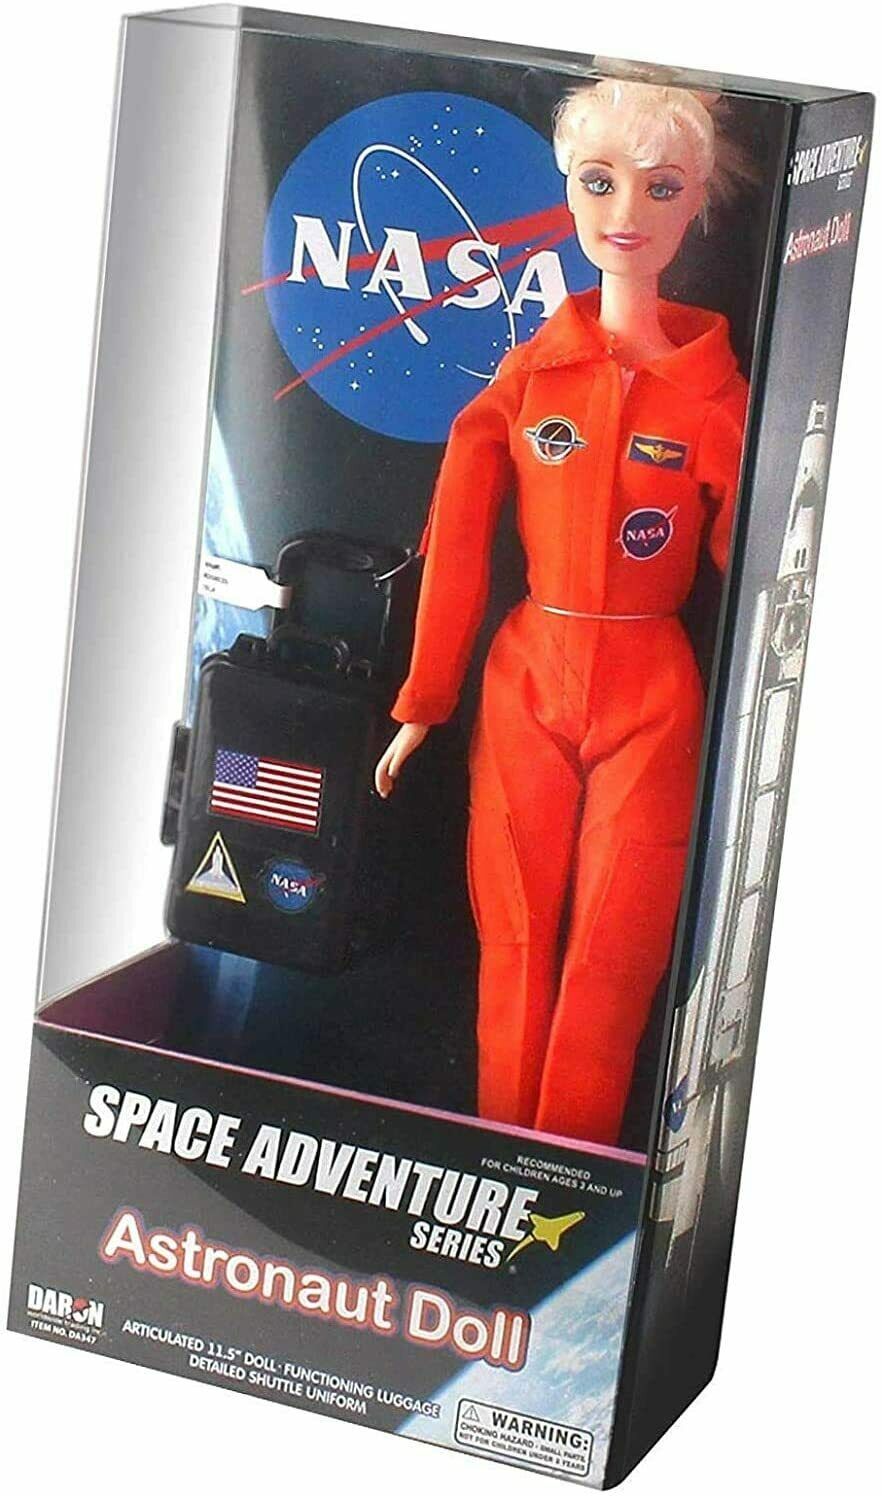 Nasa Blond American Space Adventure 11" Astronaut Doll Accessories In Orange